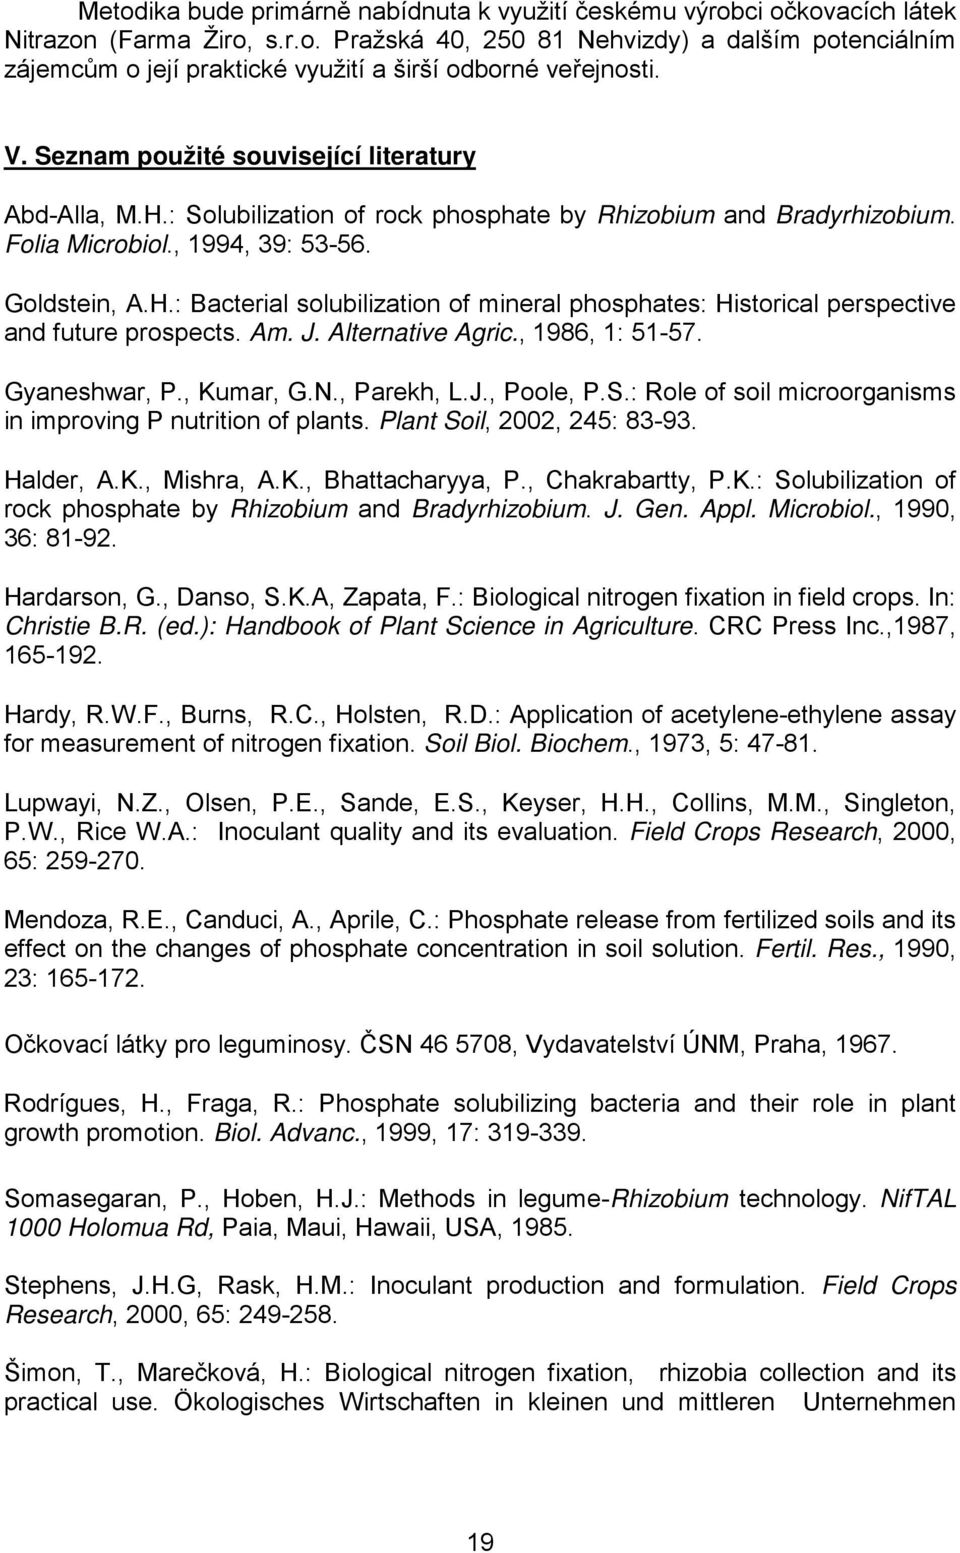 Am. J. Alternative Agric., 1986, 1: 51-57. Gyaneshwar, P., Kumar, G.N., Parekh, L.J., Poole, P.S.: Role of soil microorganisms in improving P nutrition of plants. Plant Soil, 2002, 245: 83-93.